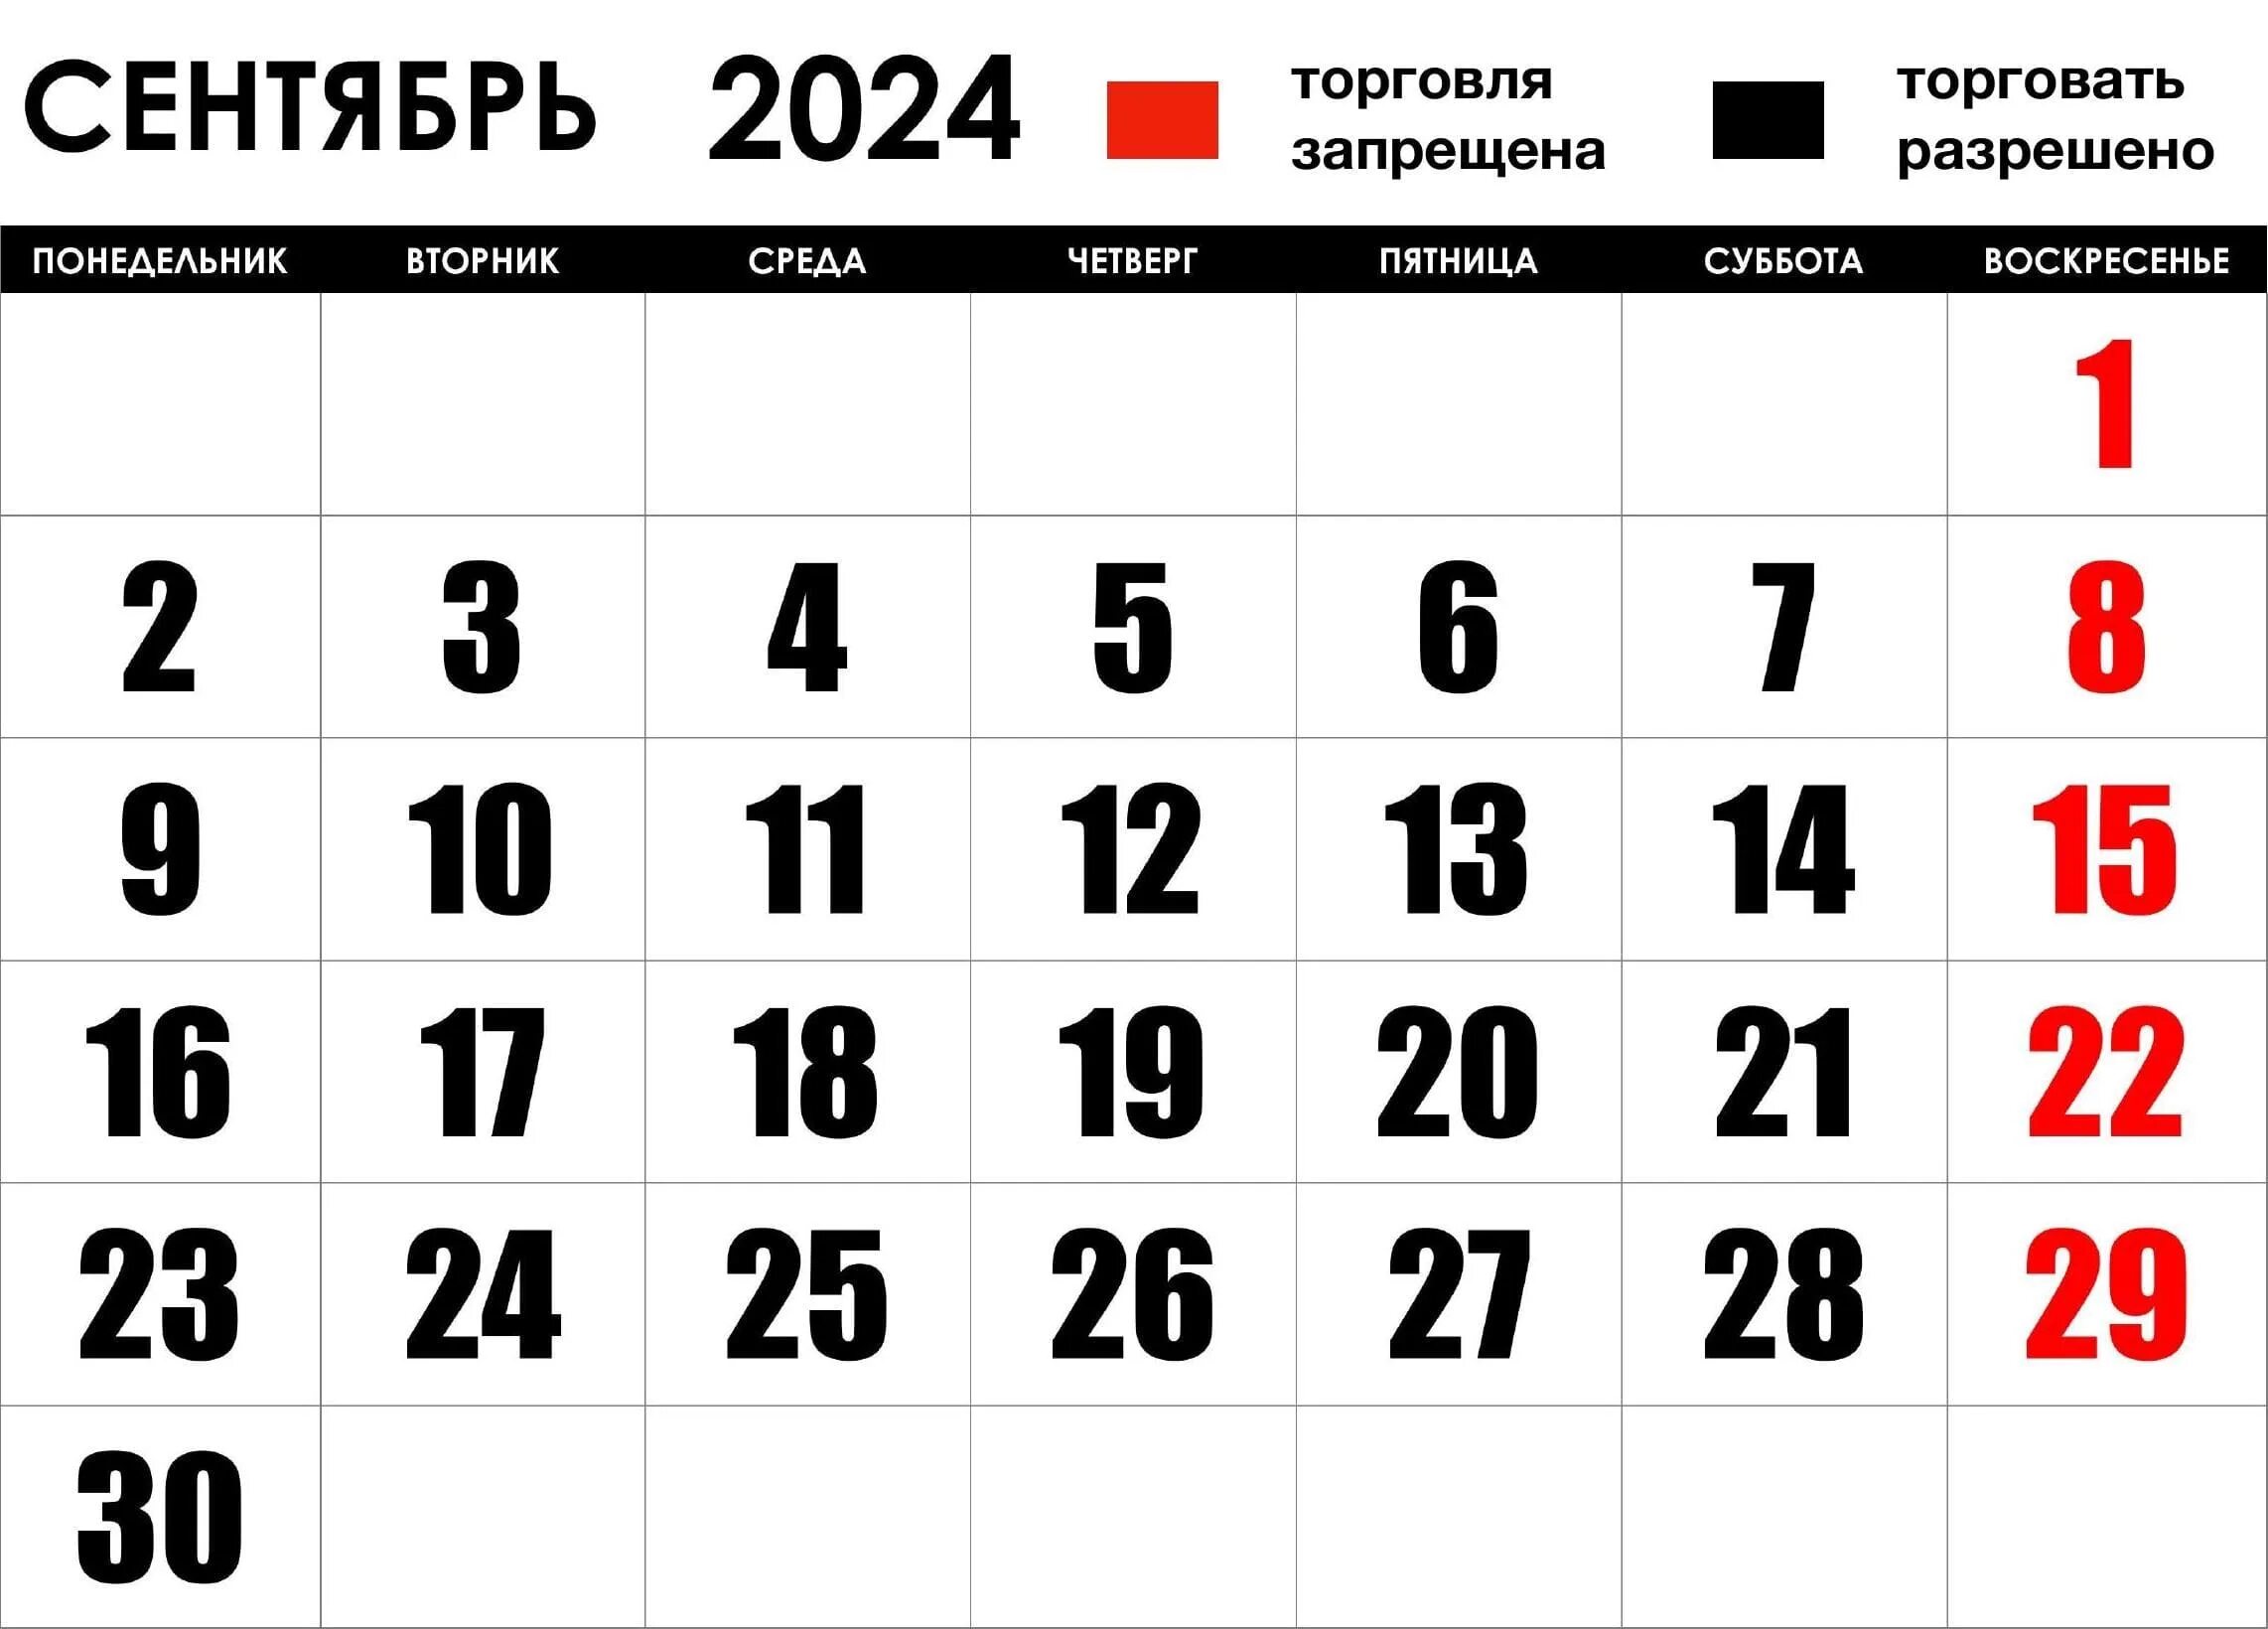 Сильные даты 2024. Календарь насентяюрь 2024. Сентябрь 2024. Календарь сентябрь 2024 года. Sentabr Calendar 2024.